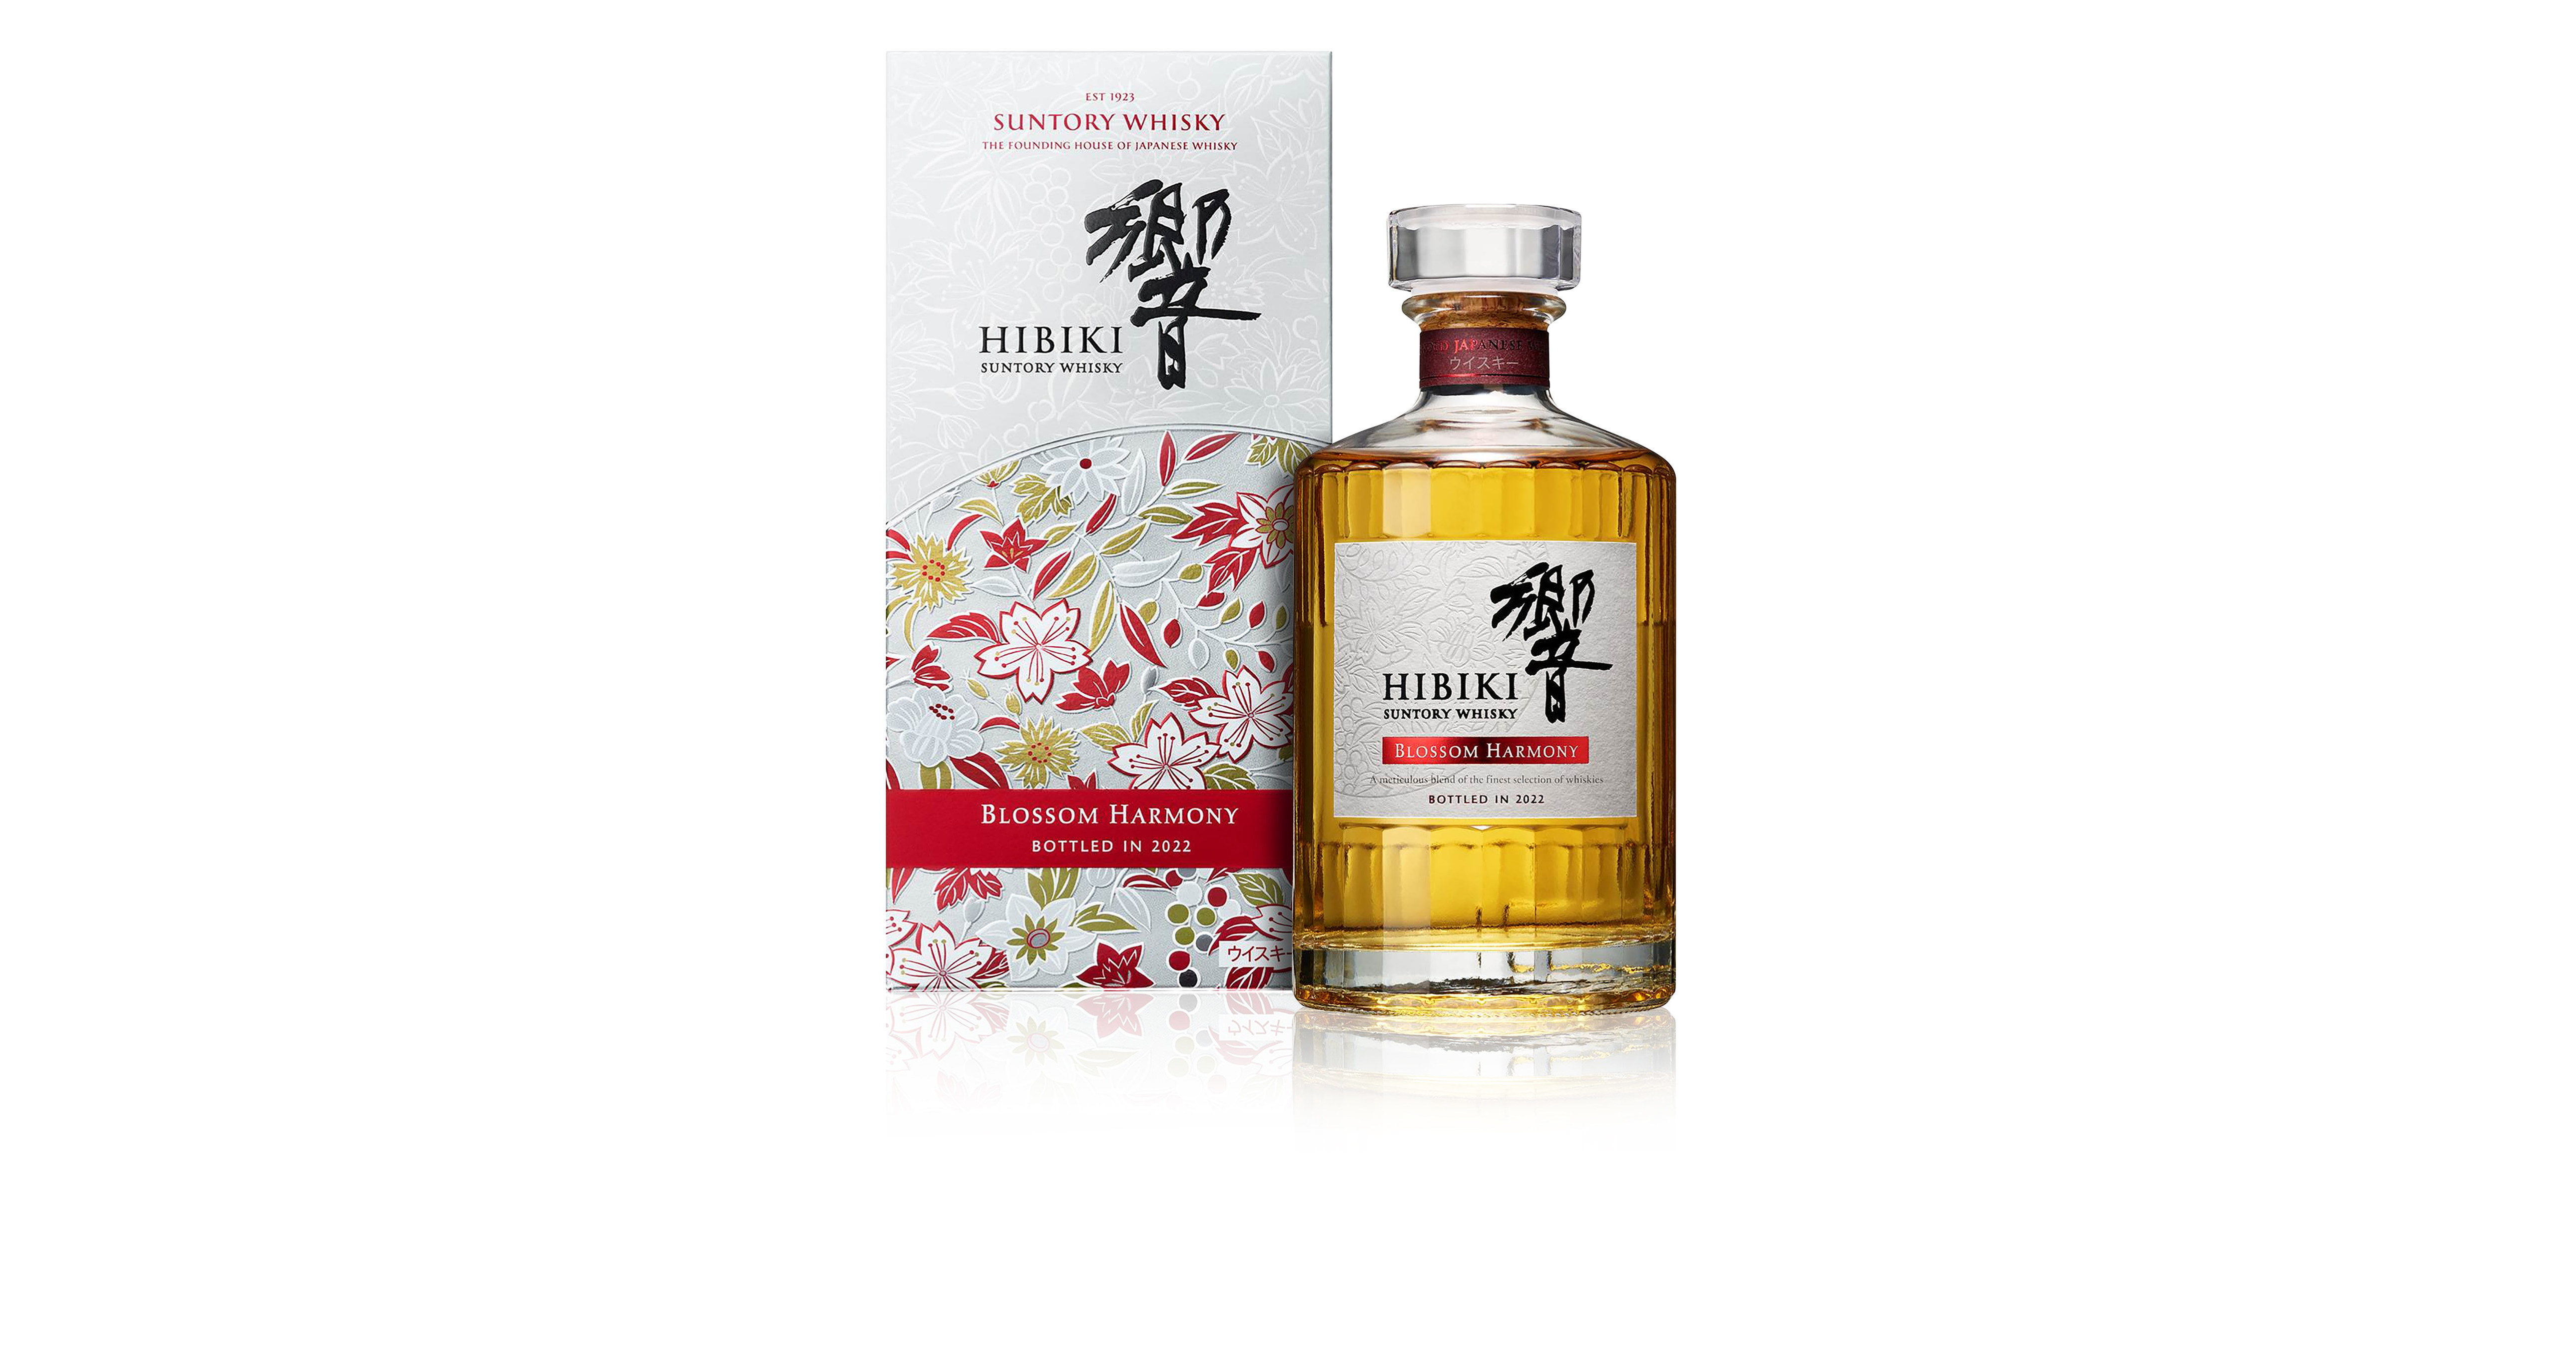 Japanese Whisky-HIBIKI - Japonese Harmony - 43% - Clos des